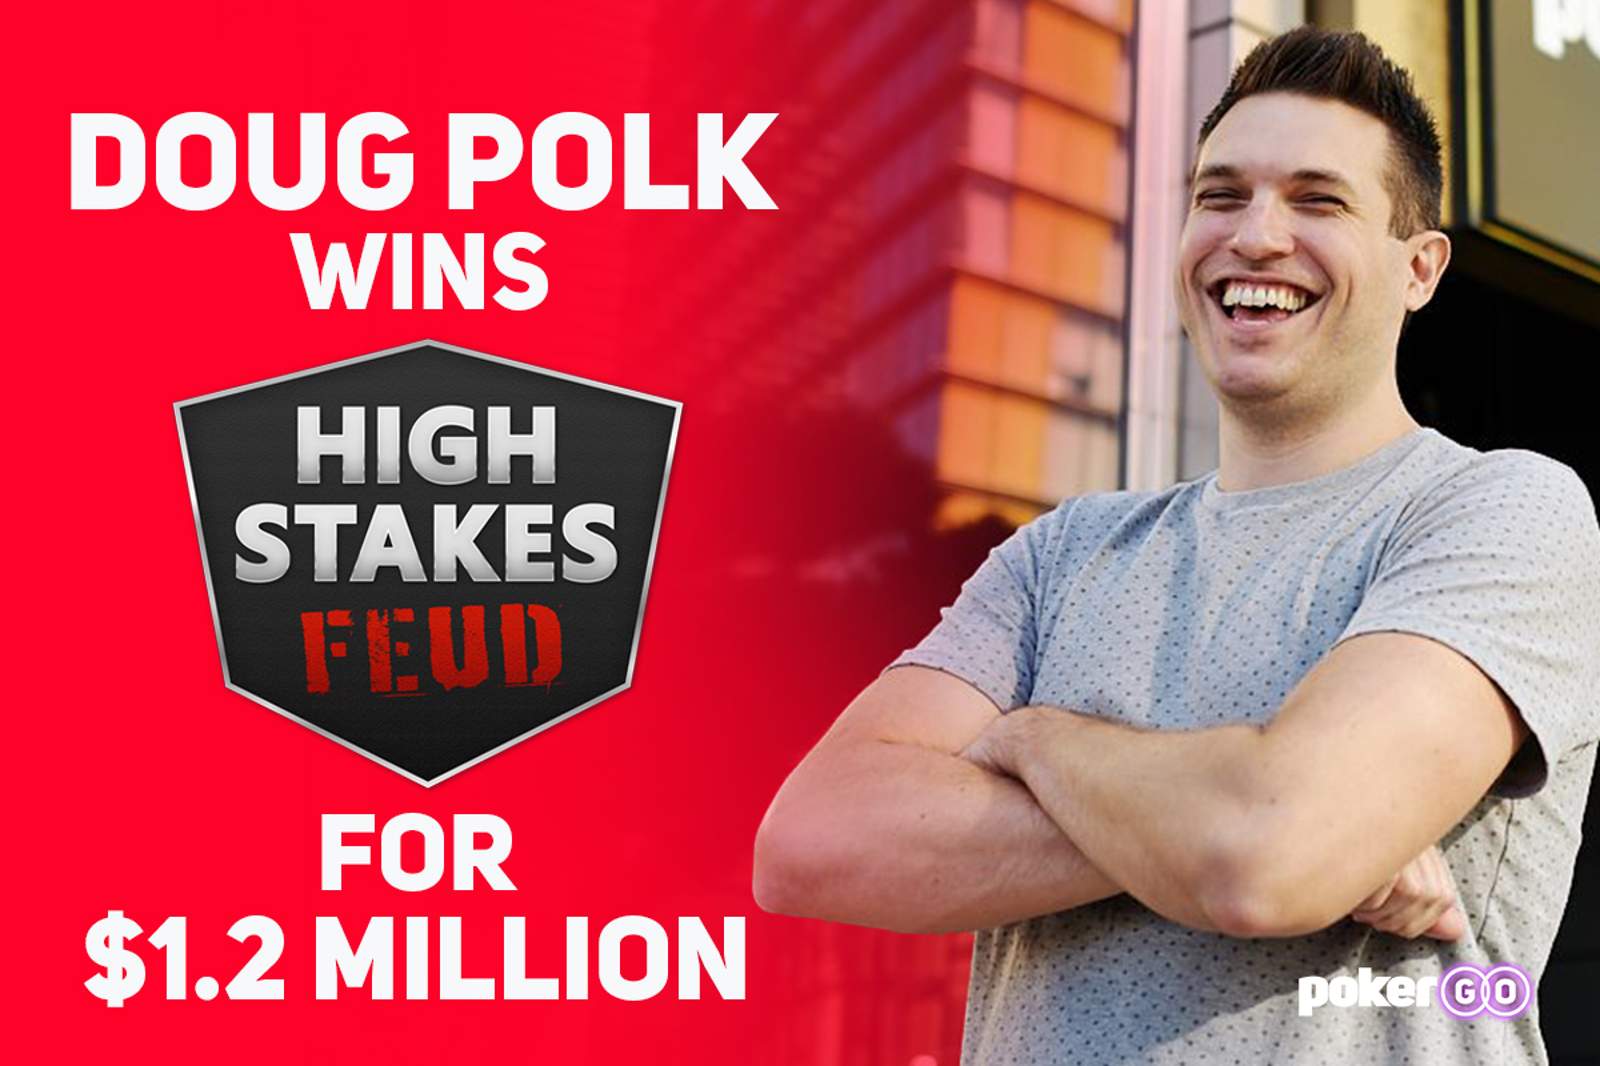 Doug Polk Defeats Daniel Negreanu in High Stakes Feud for $1.2 Million